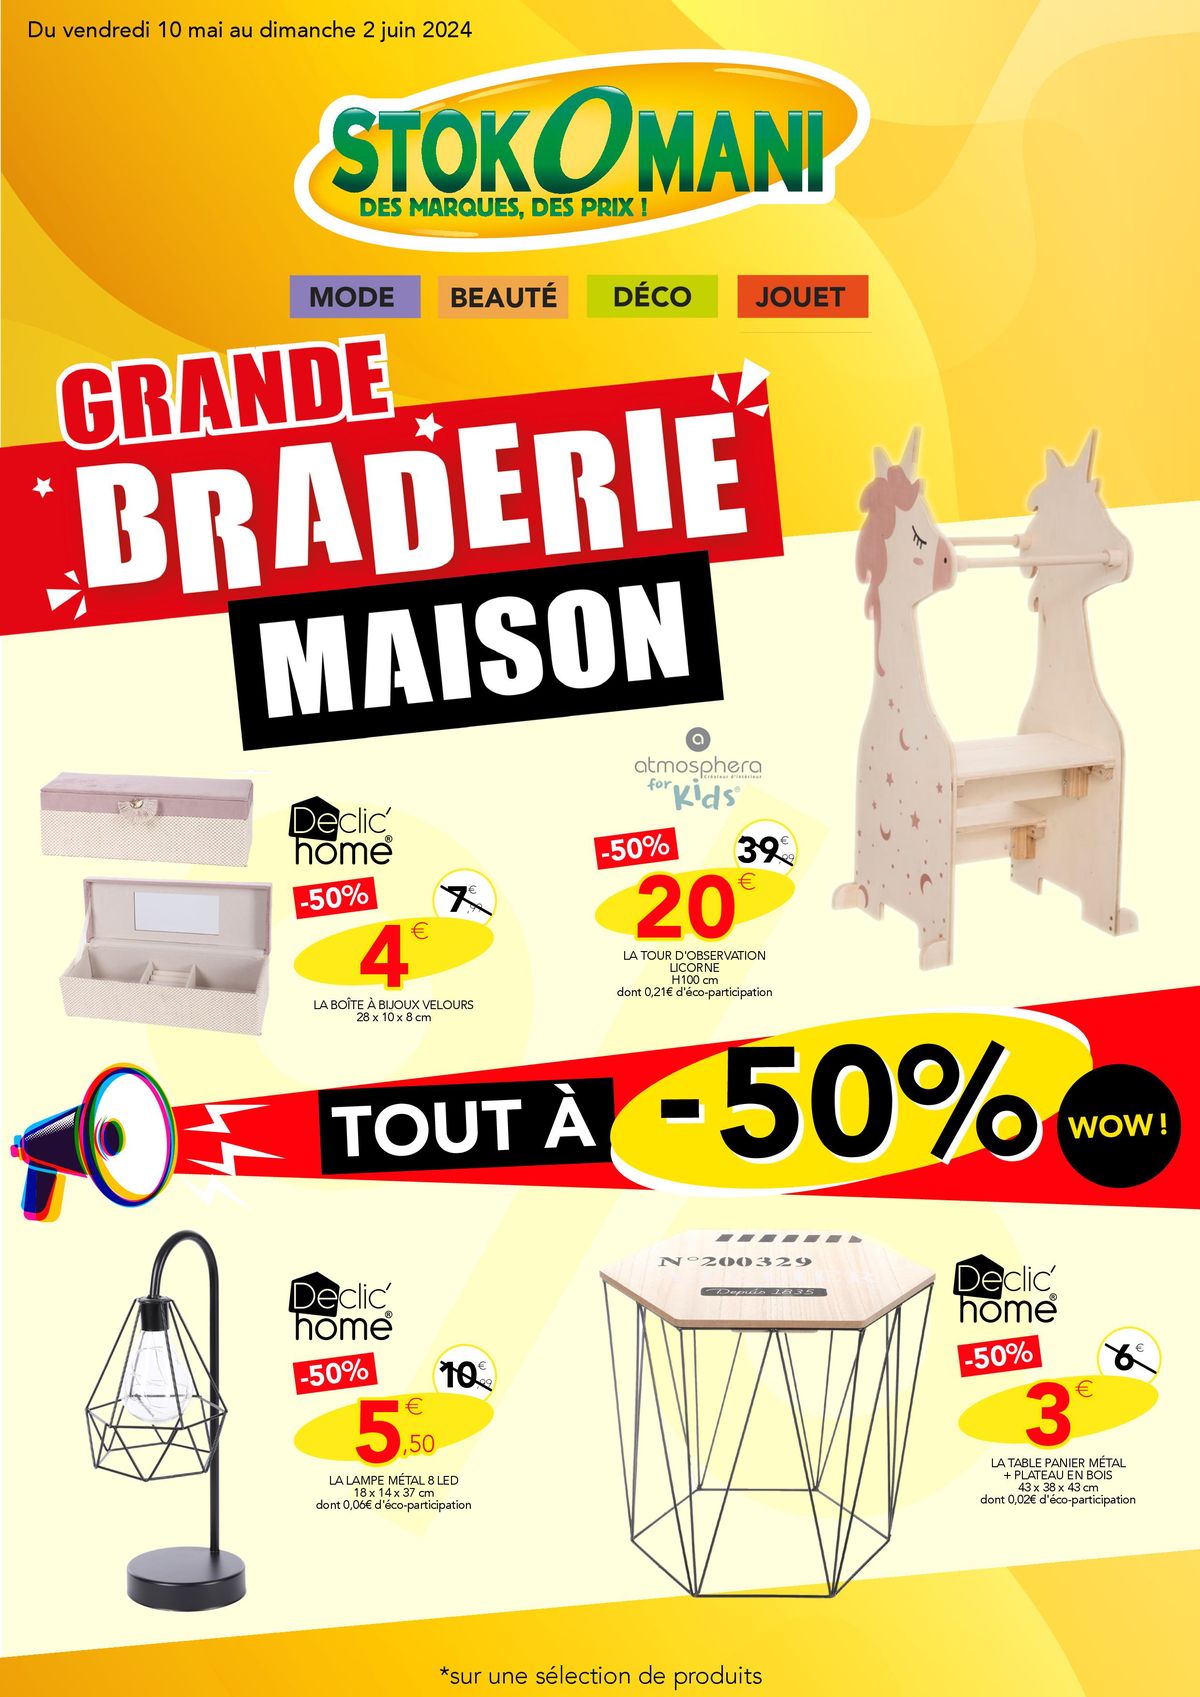 Catalogue Grande braderie maison, page 00001